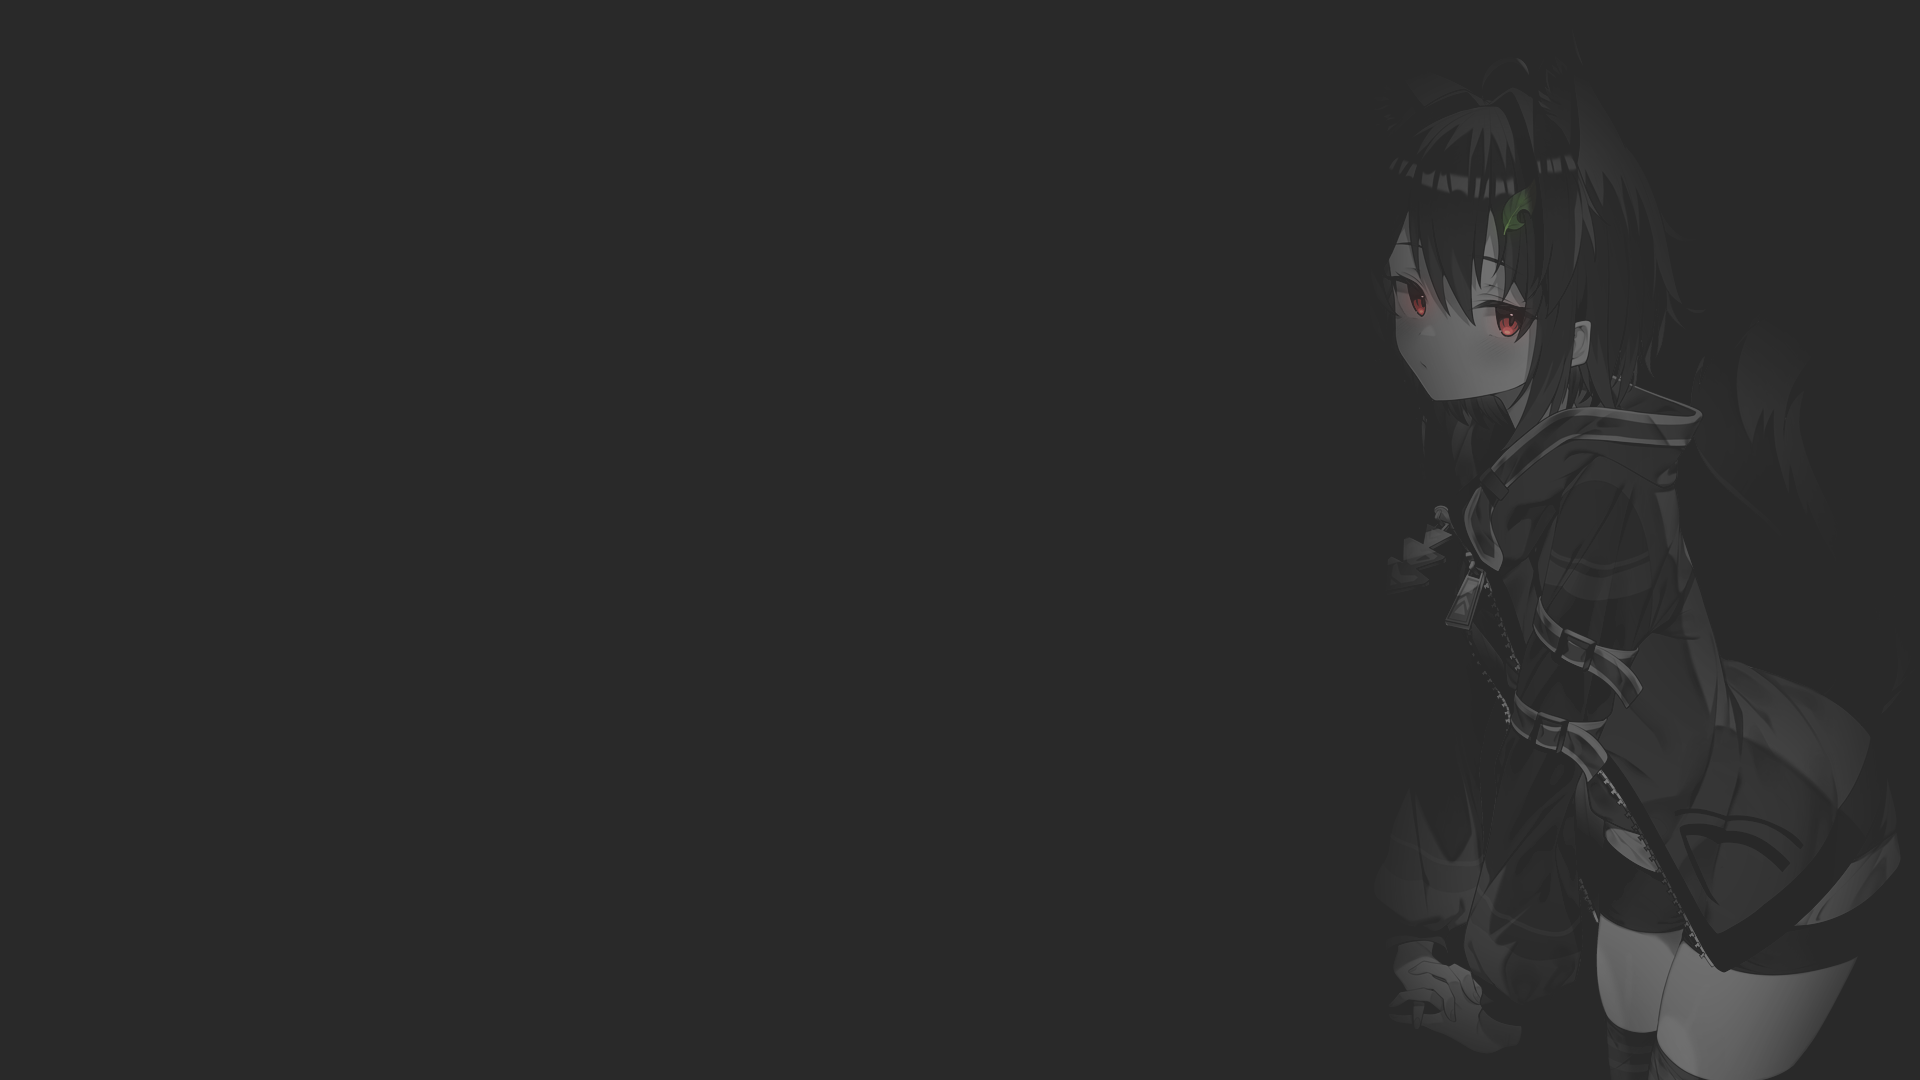 Anime 1920x1080 anime anime girls fan art illustration dark background monochrome Jun (artist)